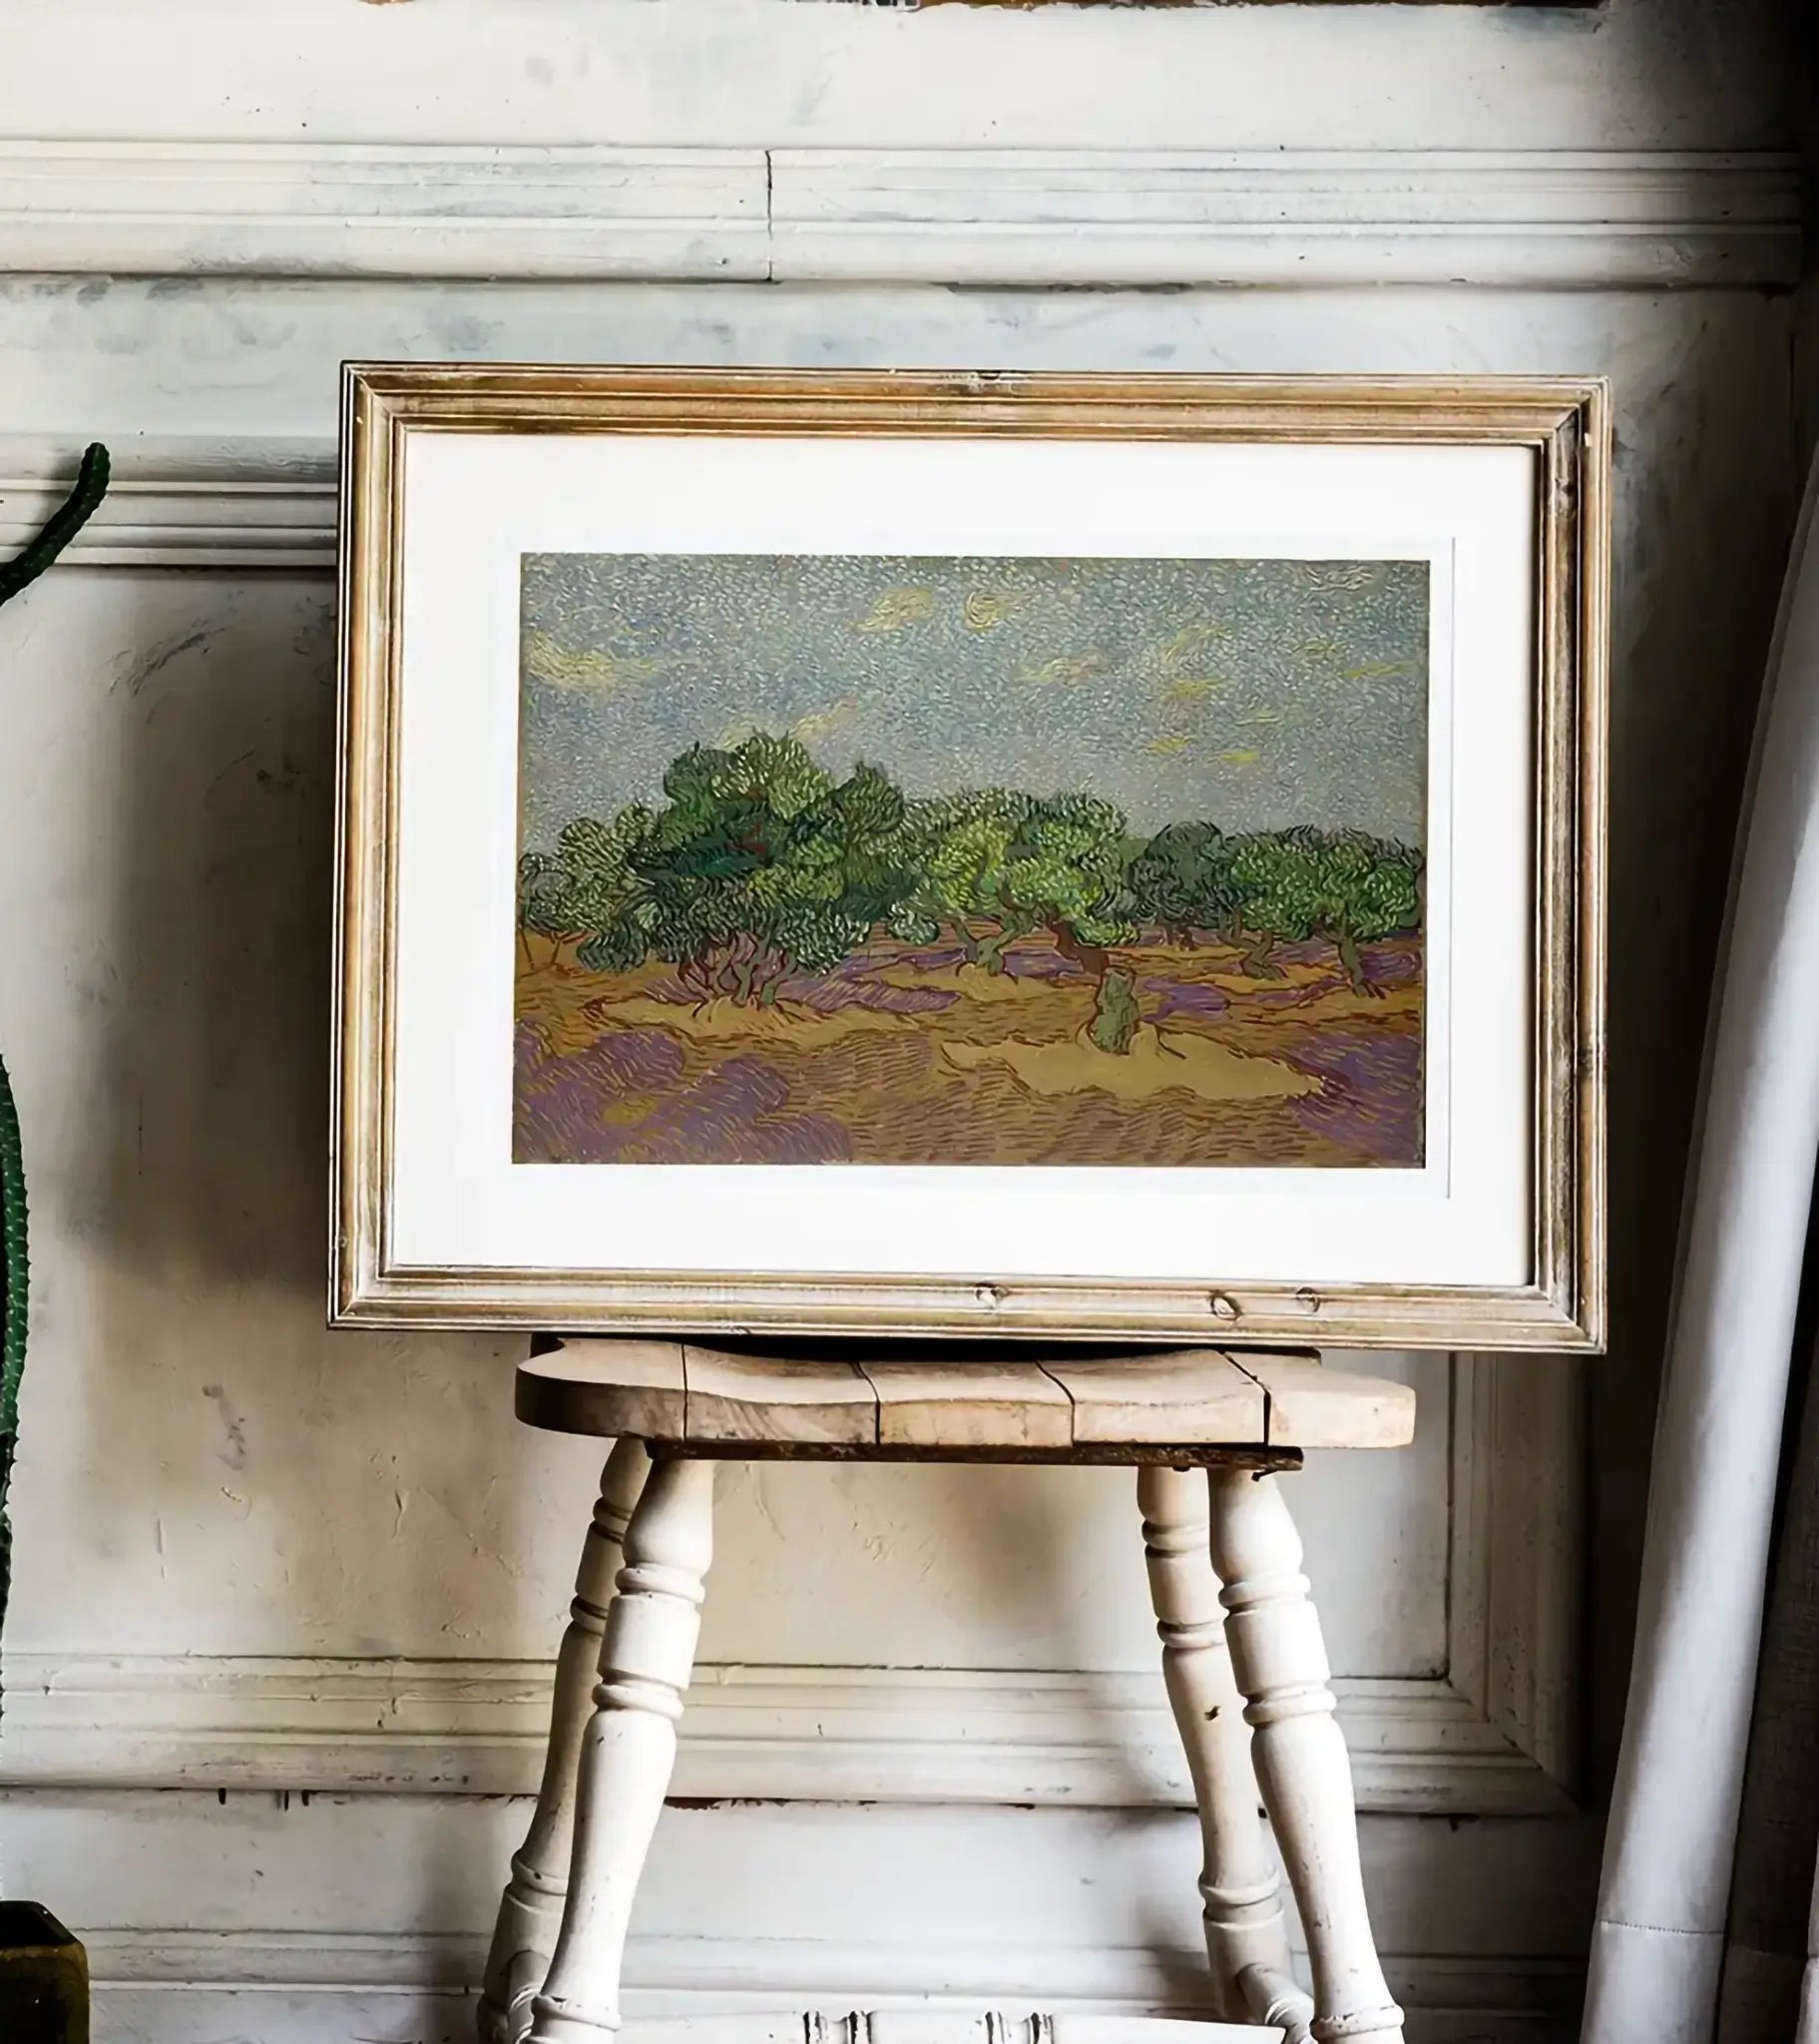 Vincent van Gogh - The Olive Trees